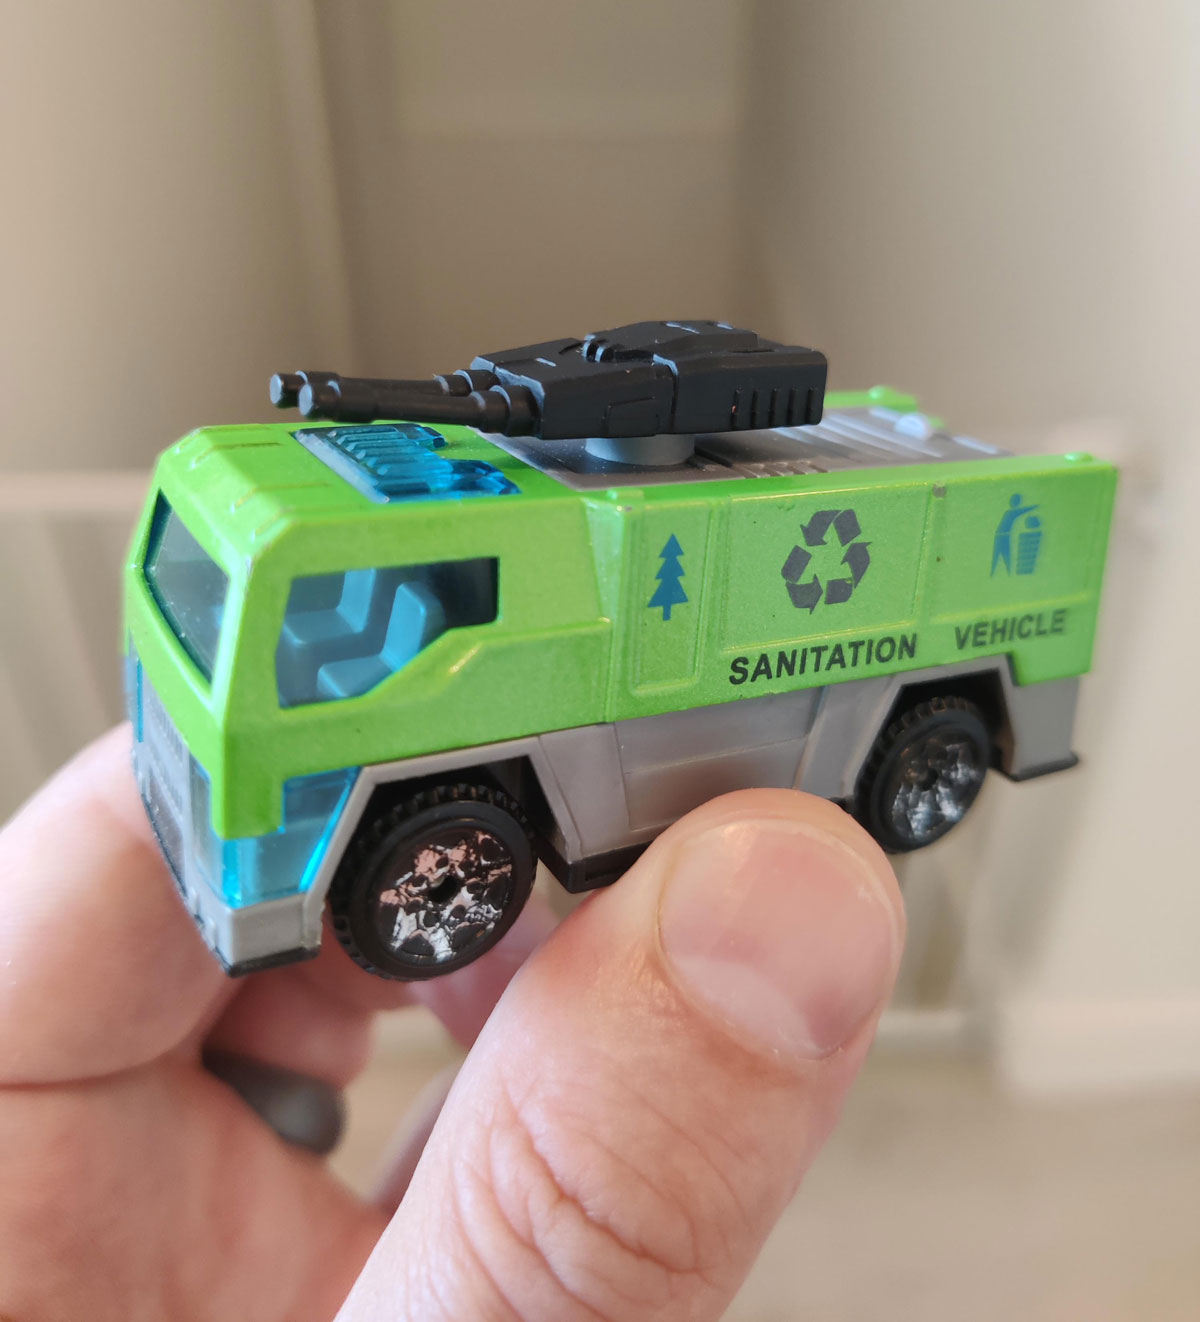 "Sanitation vehicle"